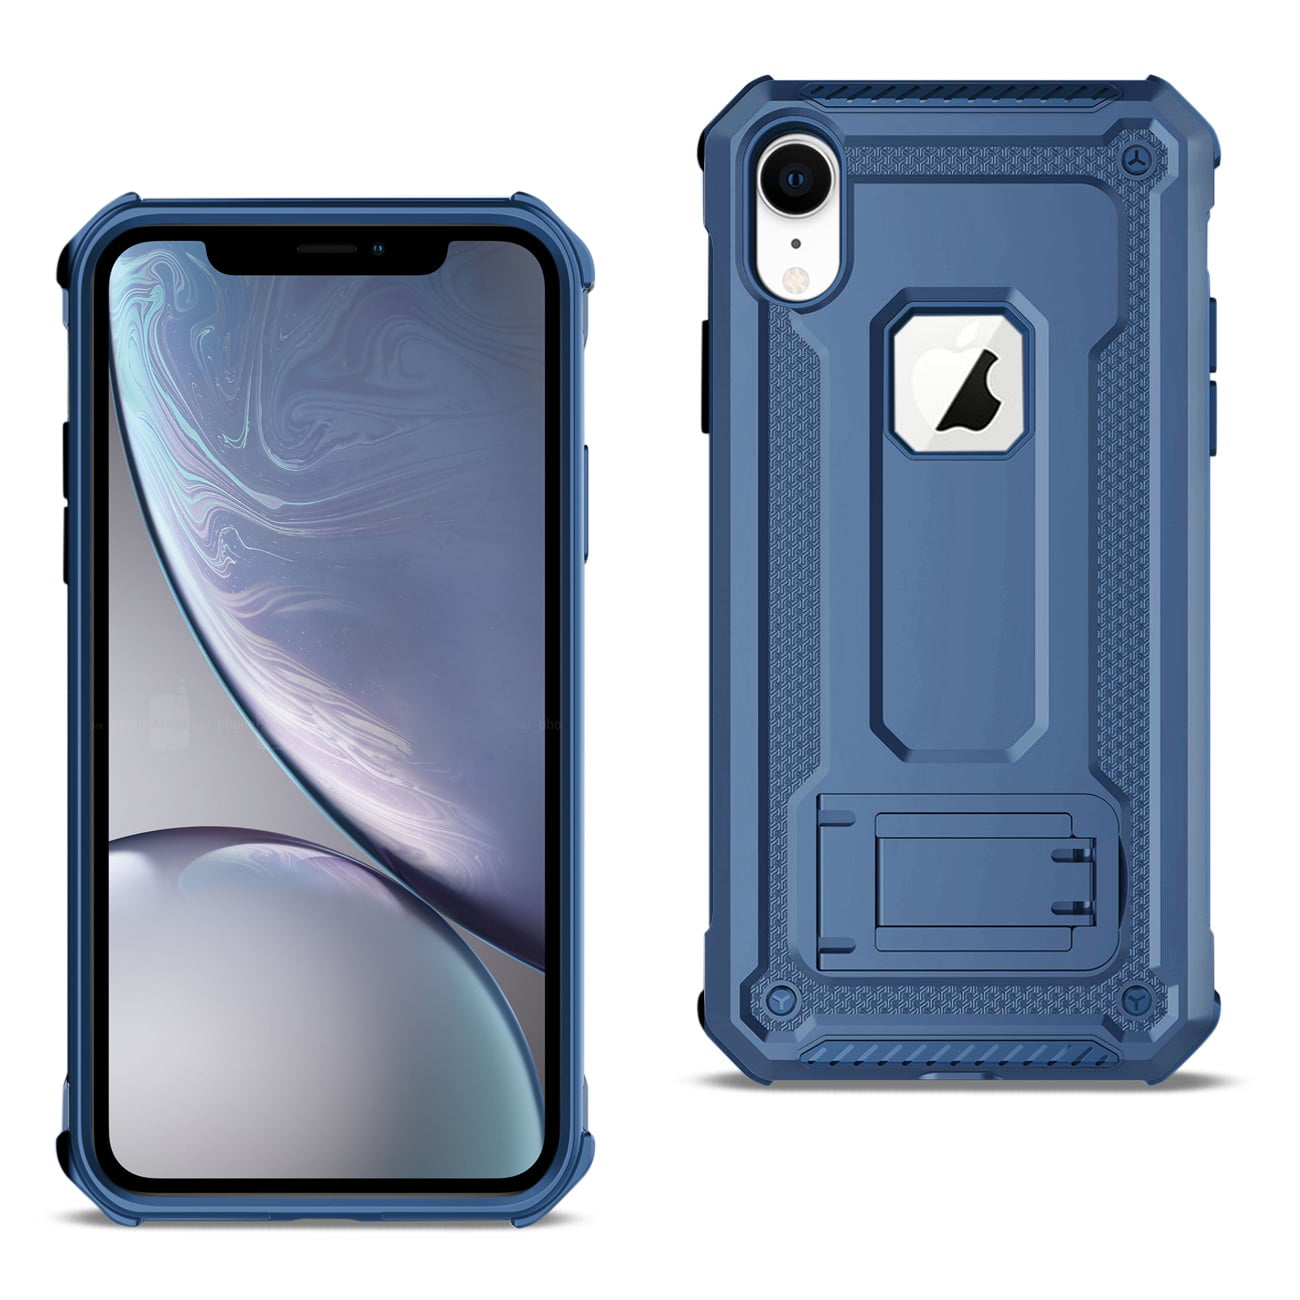 Apple Iphone Xr Case With Kickstand In Blue - Walmart.com - Walmart.com